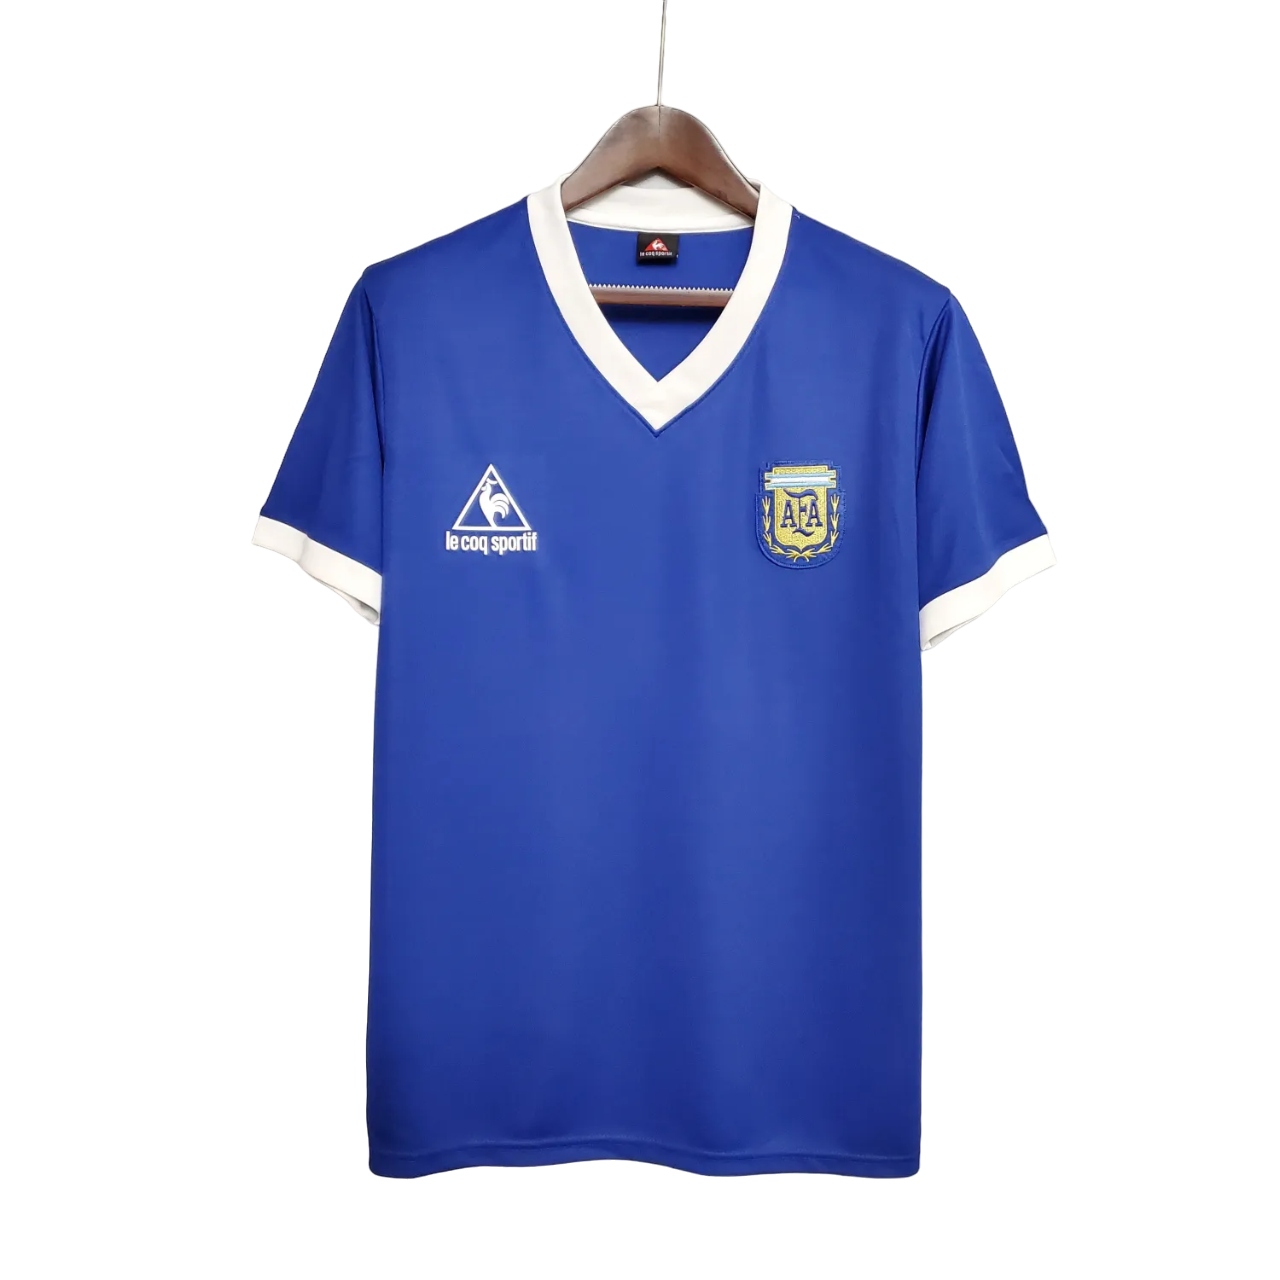 Argentina Retro Away Jersey 1986 Blue Men's